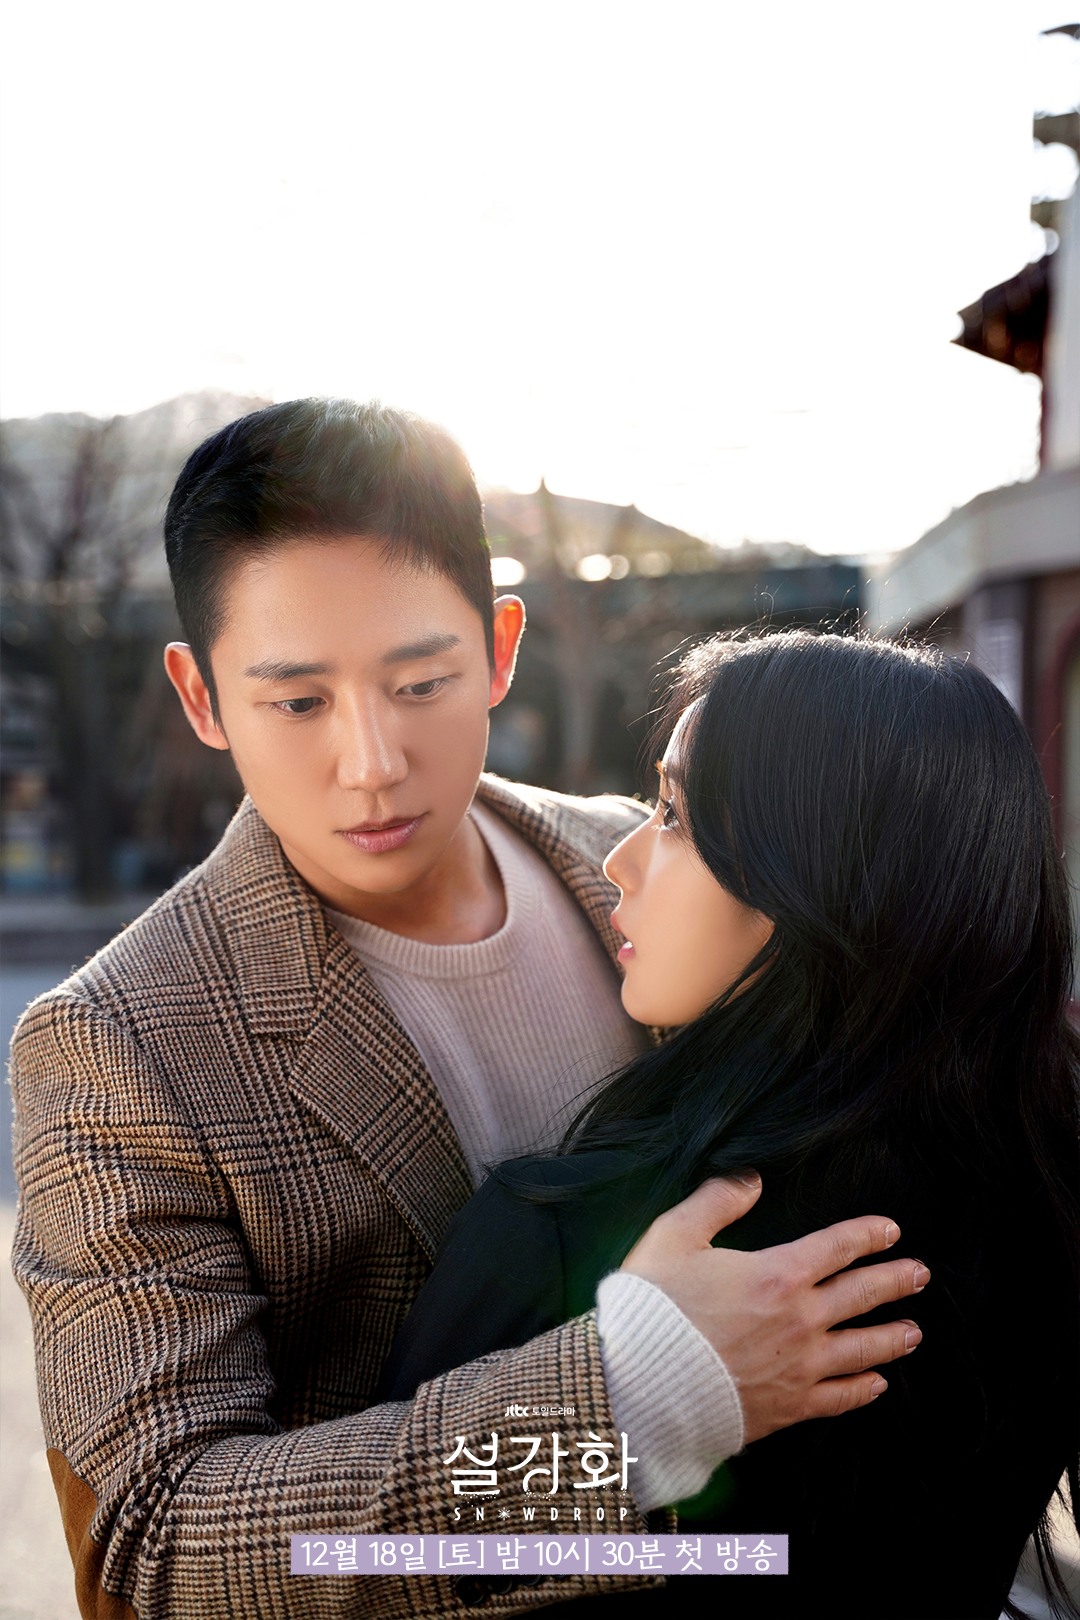 Photos New Stills Added For The Uping Korean Drama Snowdrop